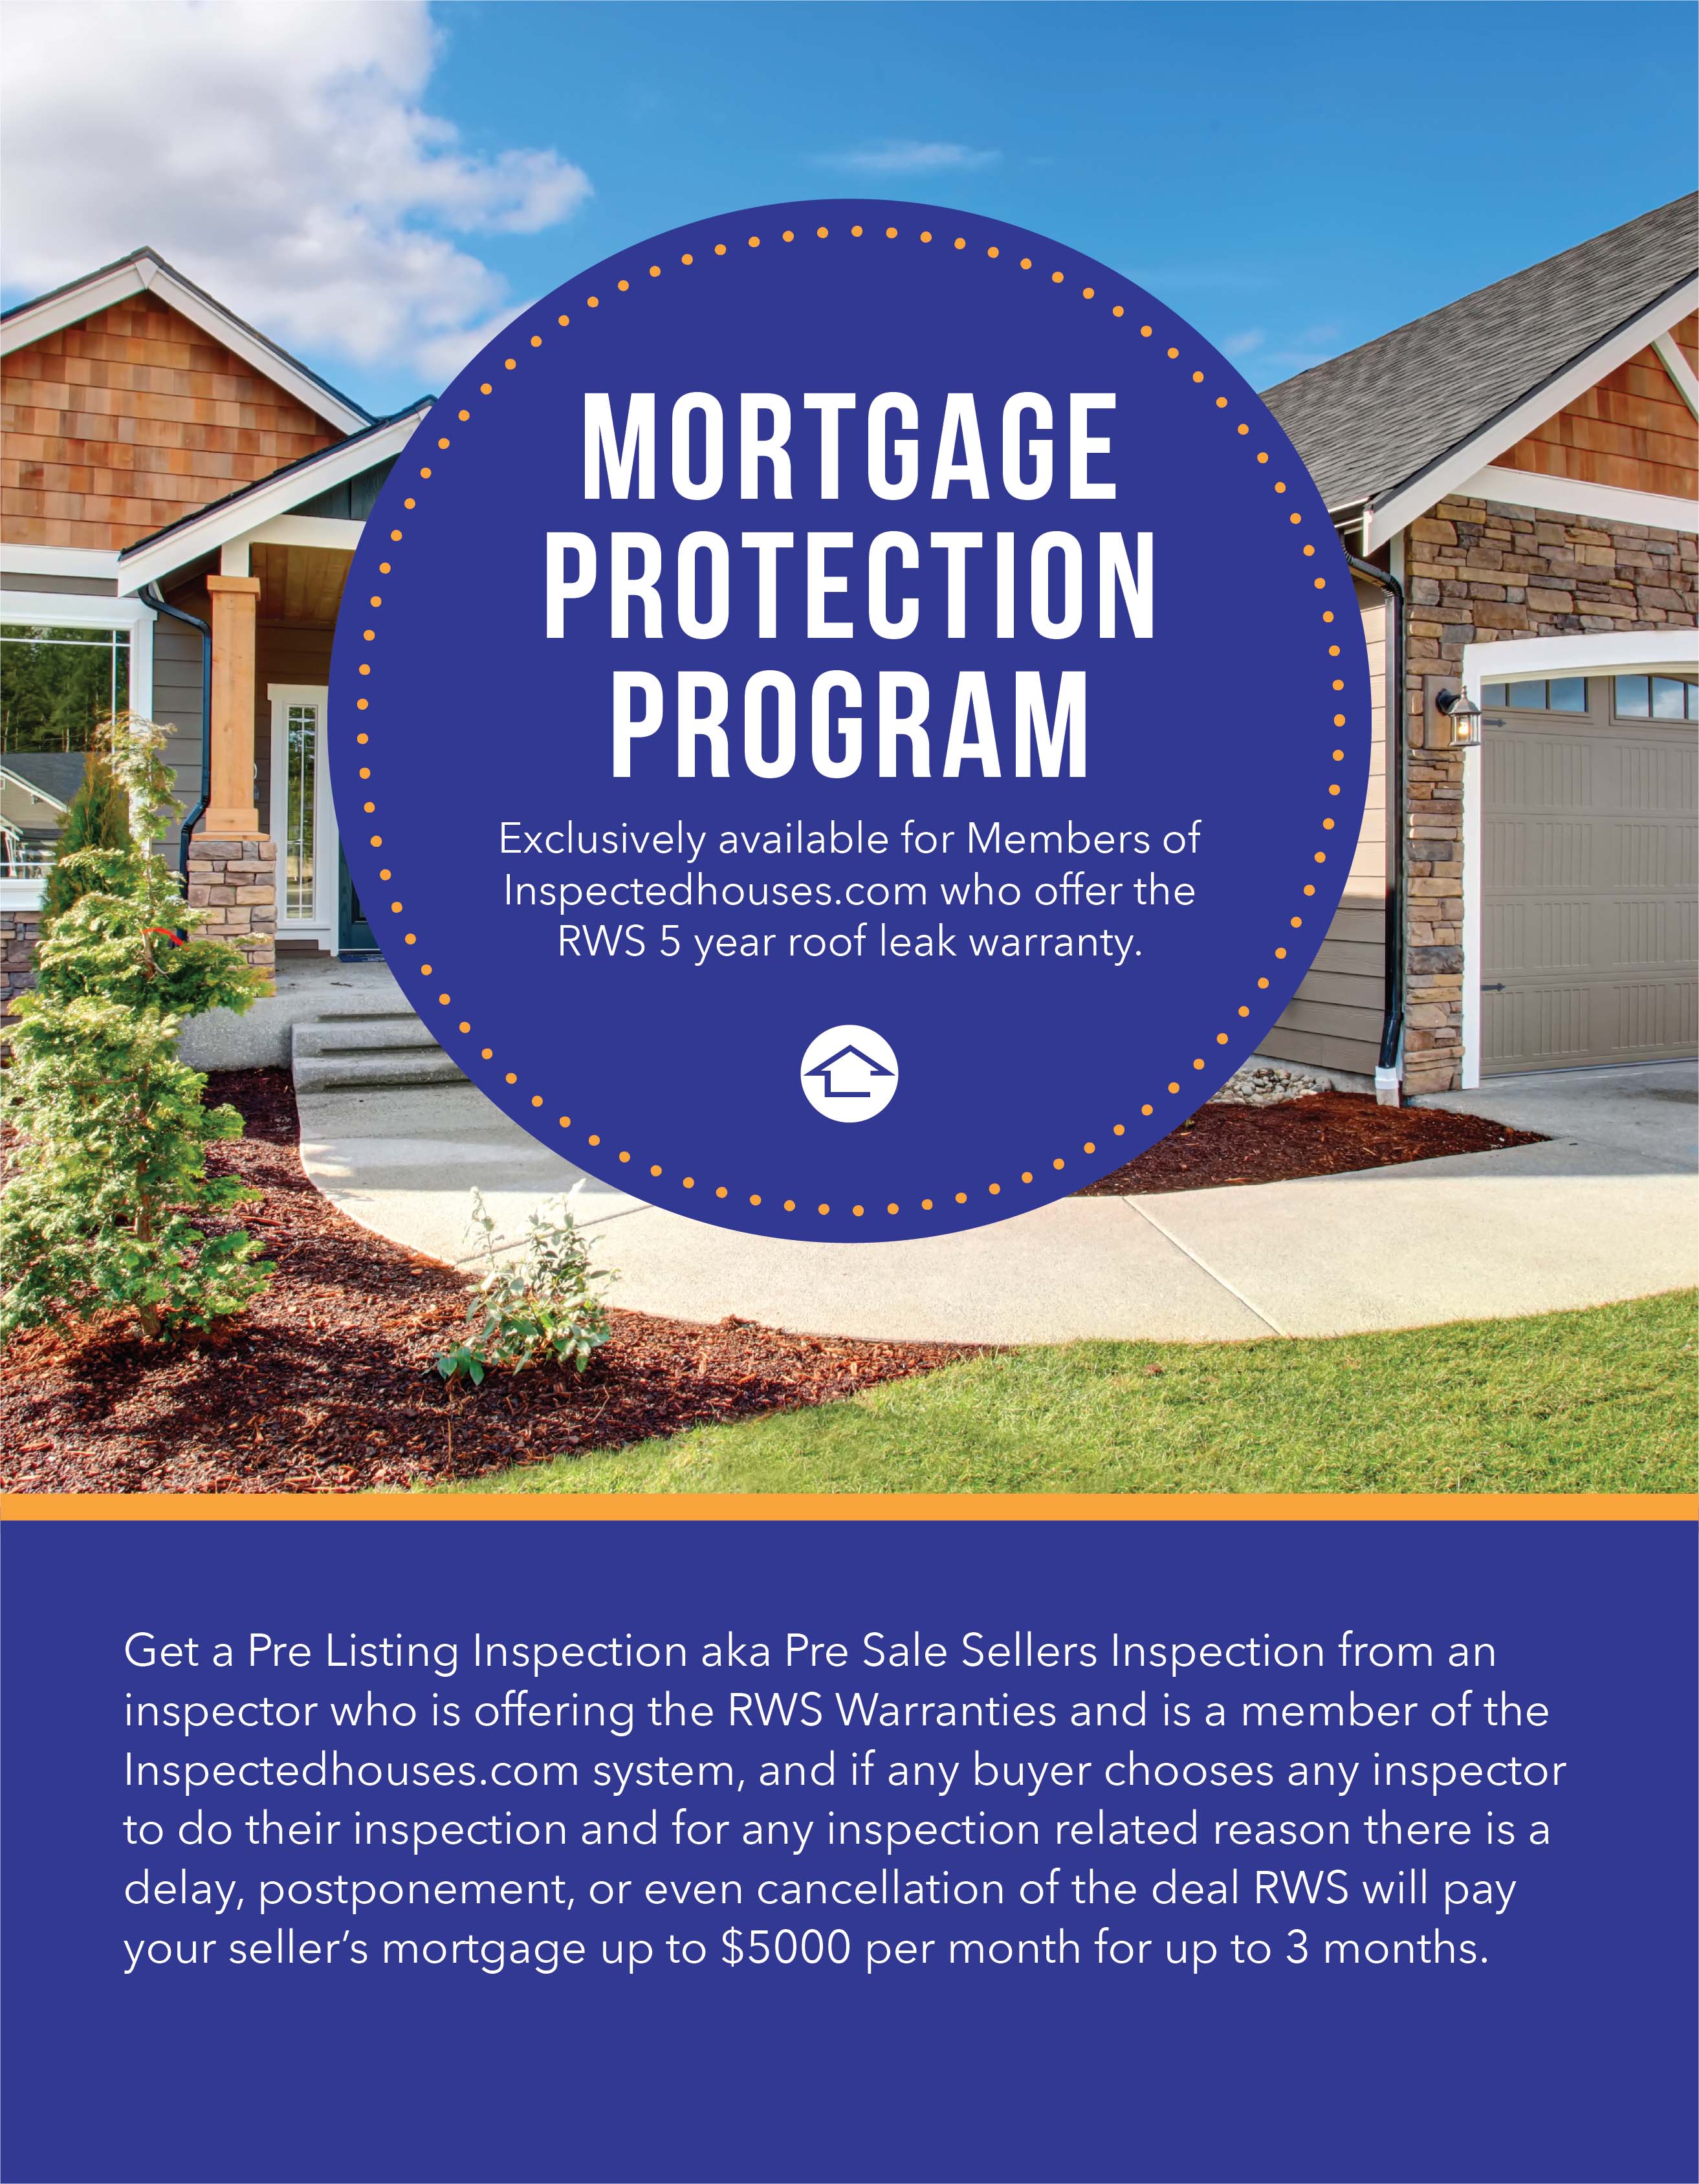 Mortgage Protection Plan